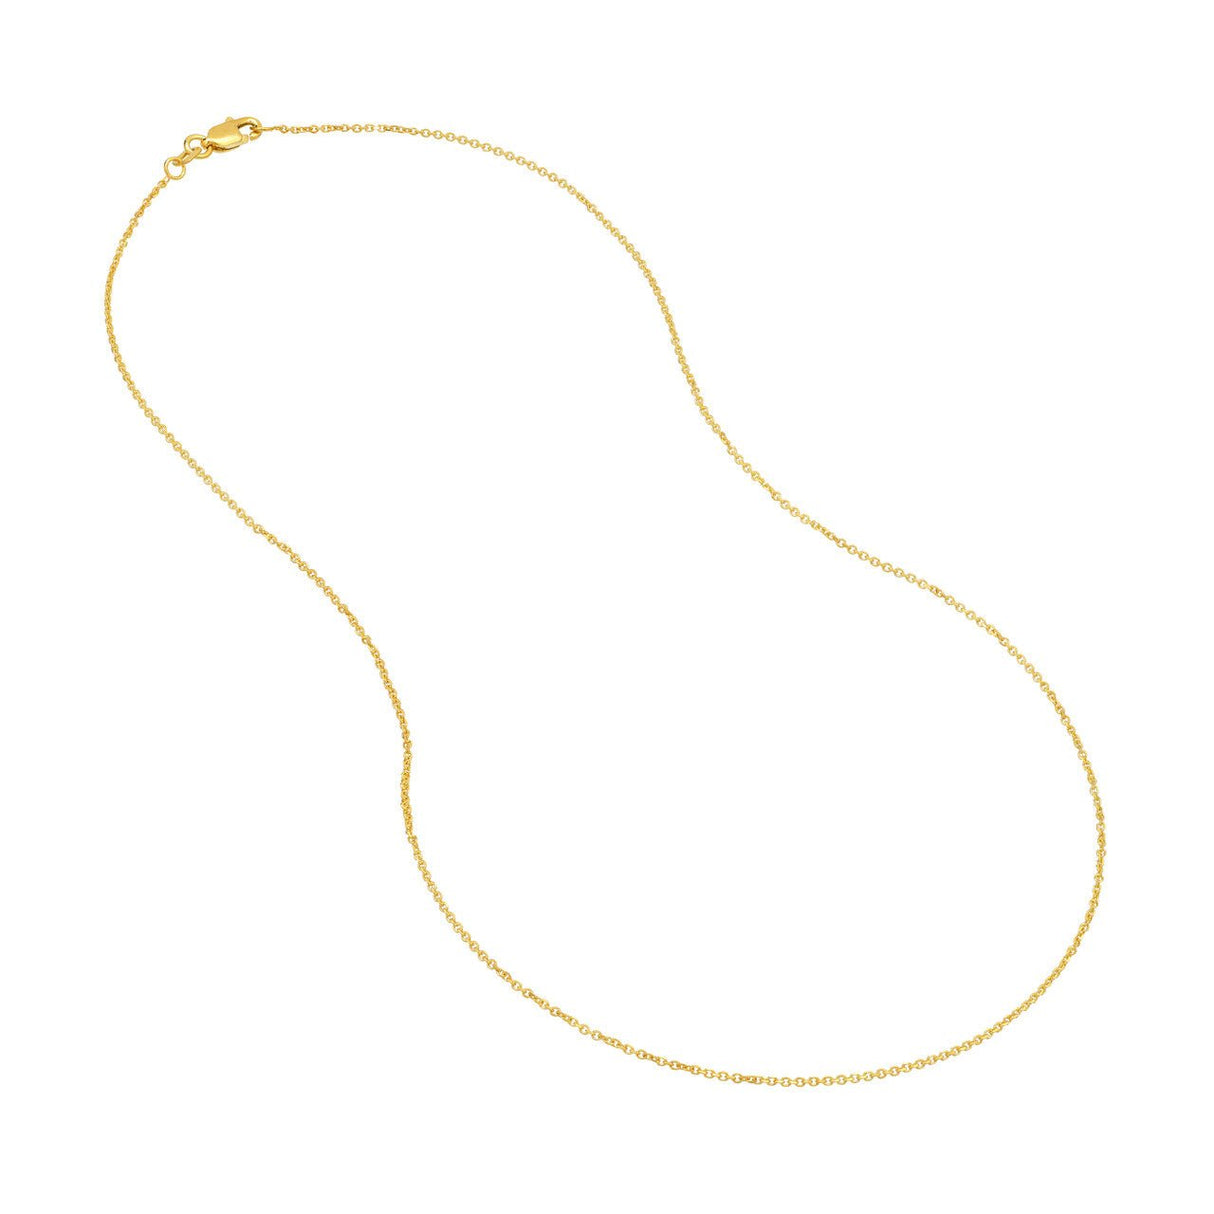 14K Gold Chain, 16", 1.05mm Diamond Cut Cable Chain with Lobster Lock, Gold Chain, Gold Chain Necklace, Gold Layered Chains, - Diamond Origin